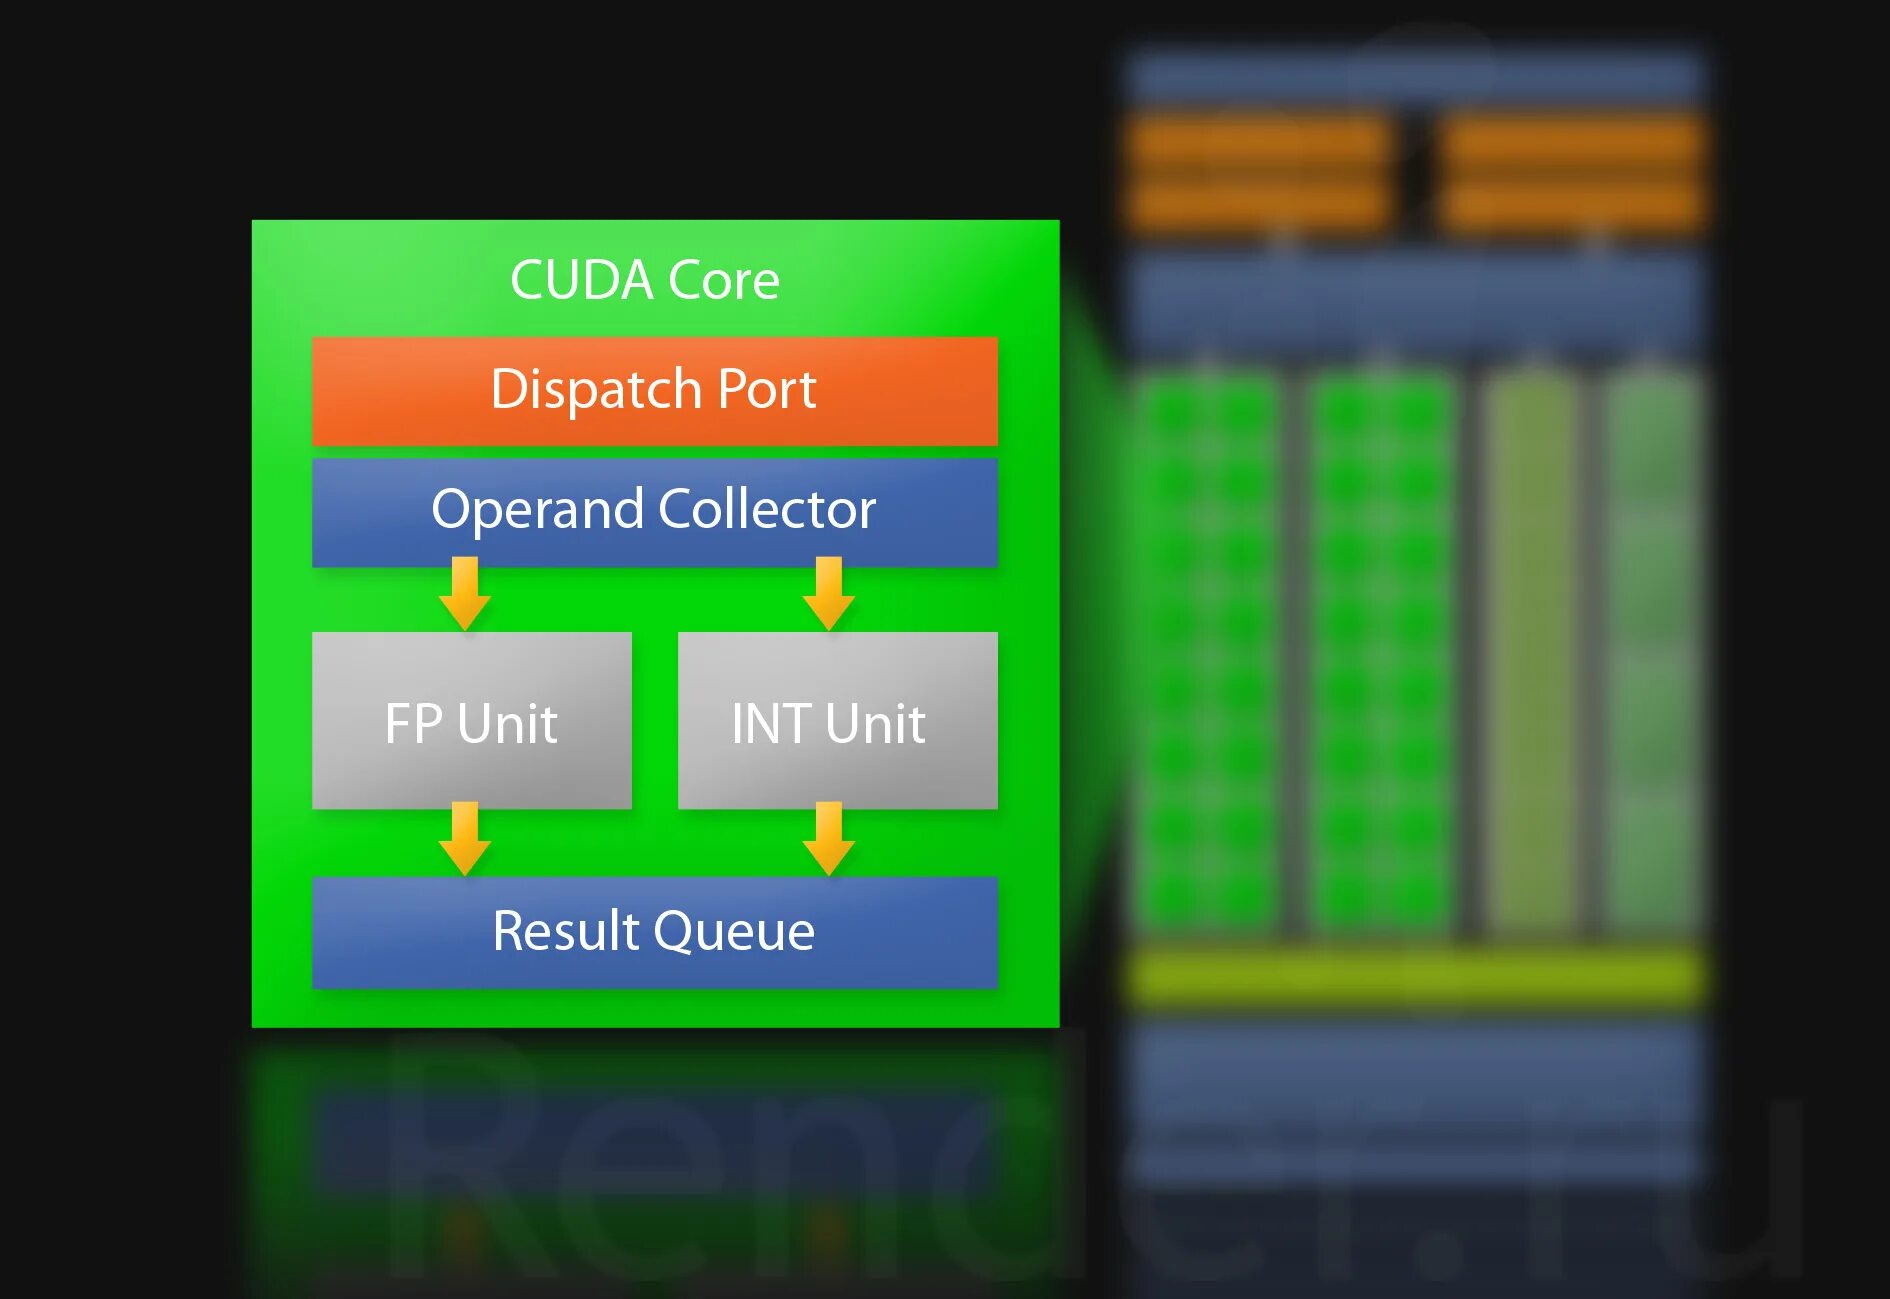 CUDA ядра. CUDA графические процессоры что это. CUDA ядра в видеокартах. CUDA ядра график. Версия cuda